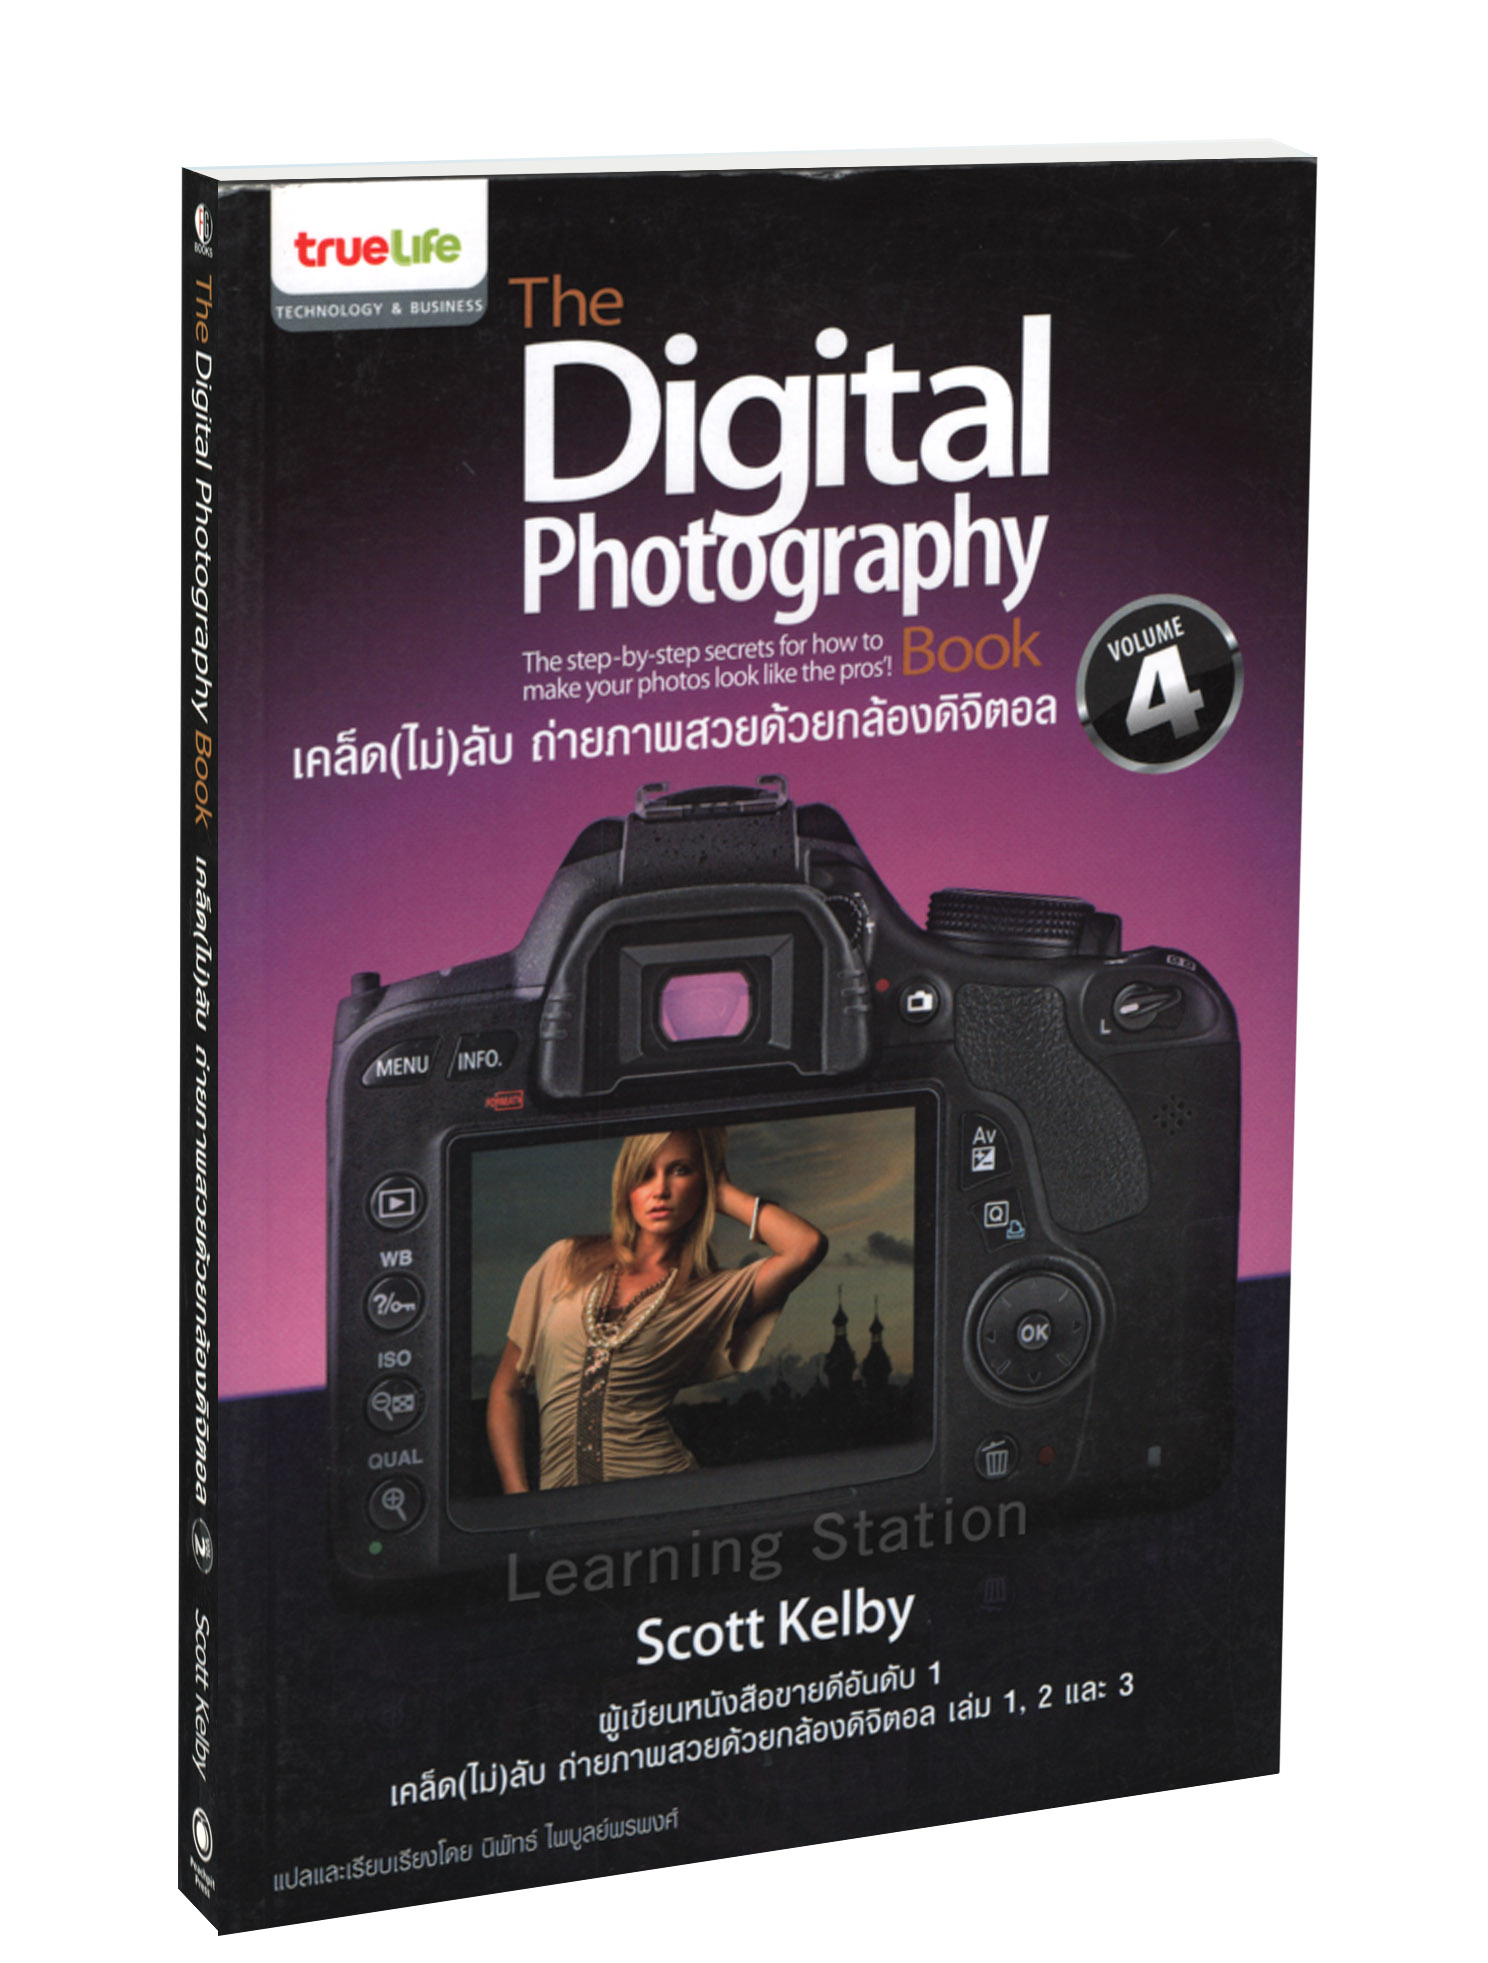 The Digital Photography Book Vol. 4 :เคล็ด (ไม่) ลับ ถ่ายภาพสวยด้วยกล้องดิจิตอล เล่ม 4